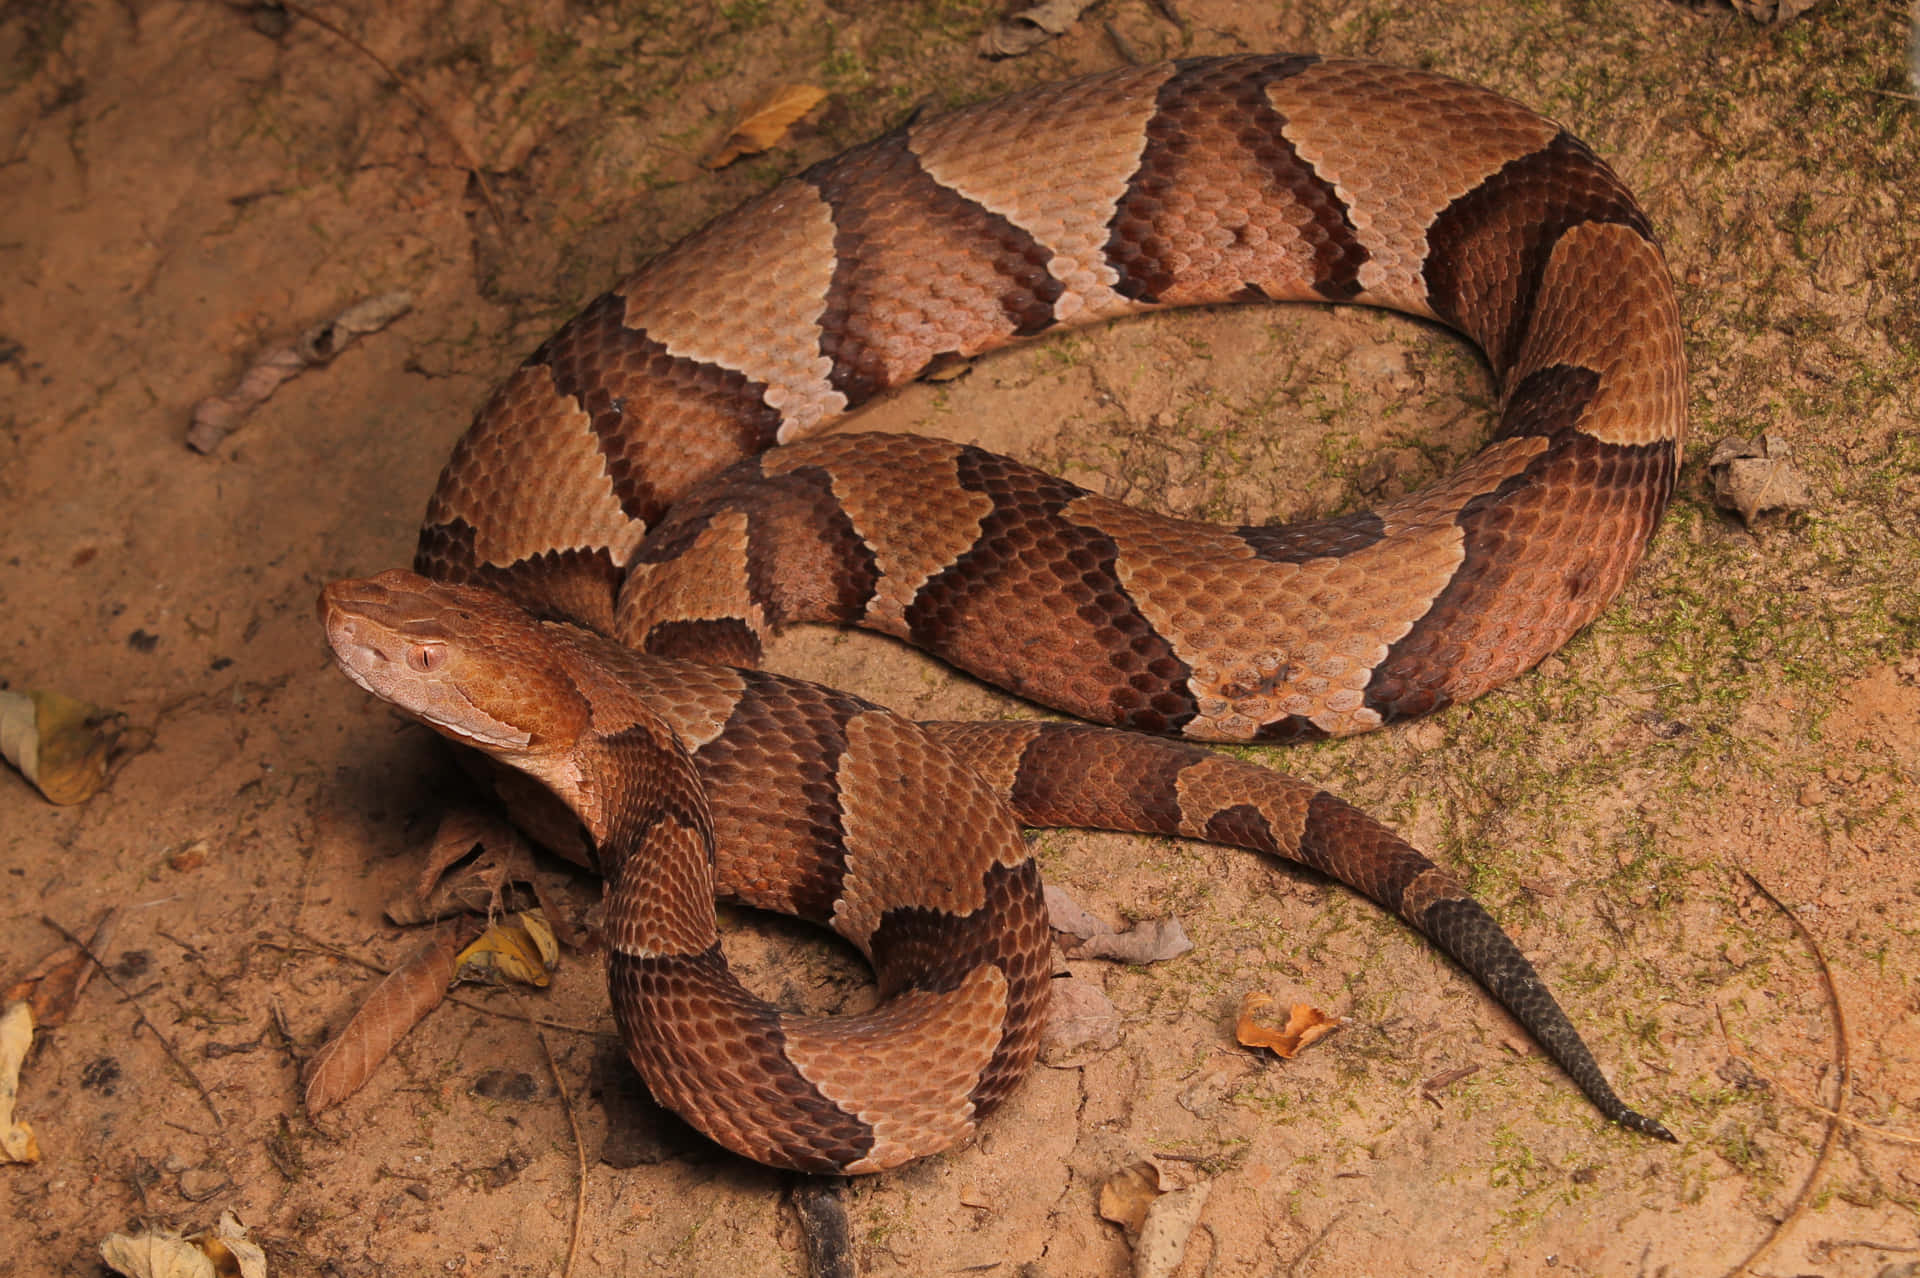 Copperhead Snake Lurks in Leaves